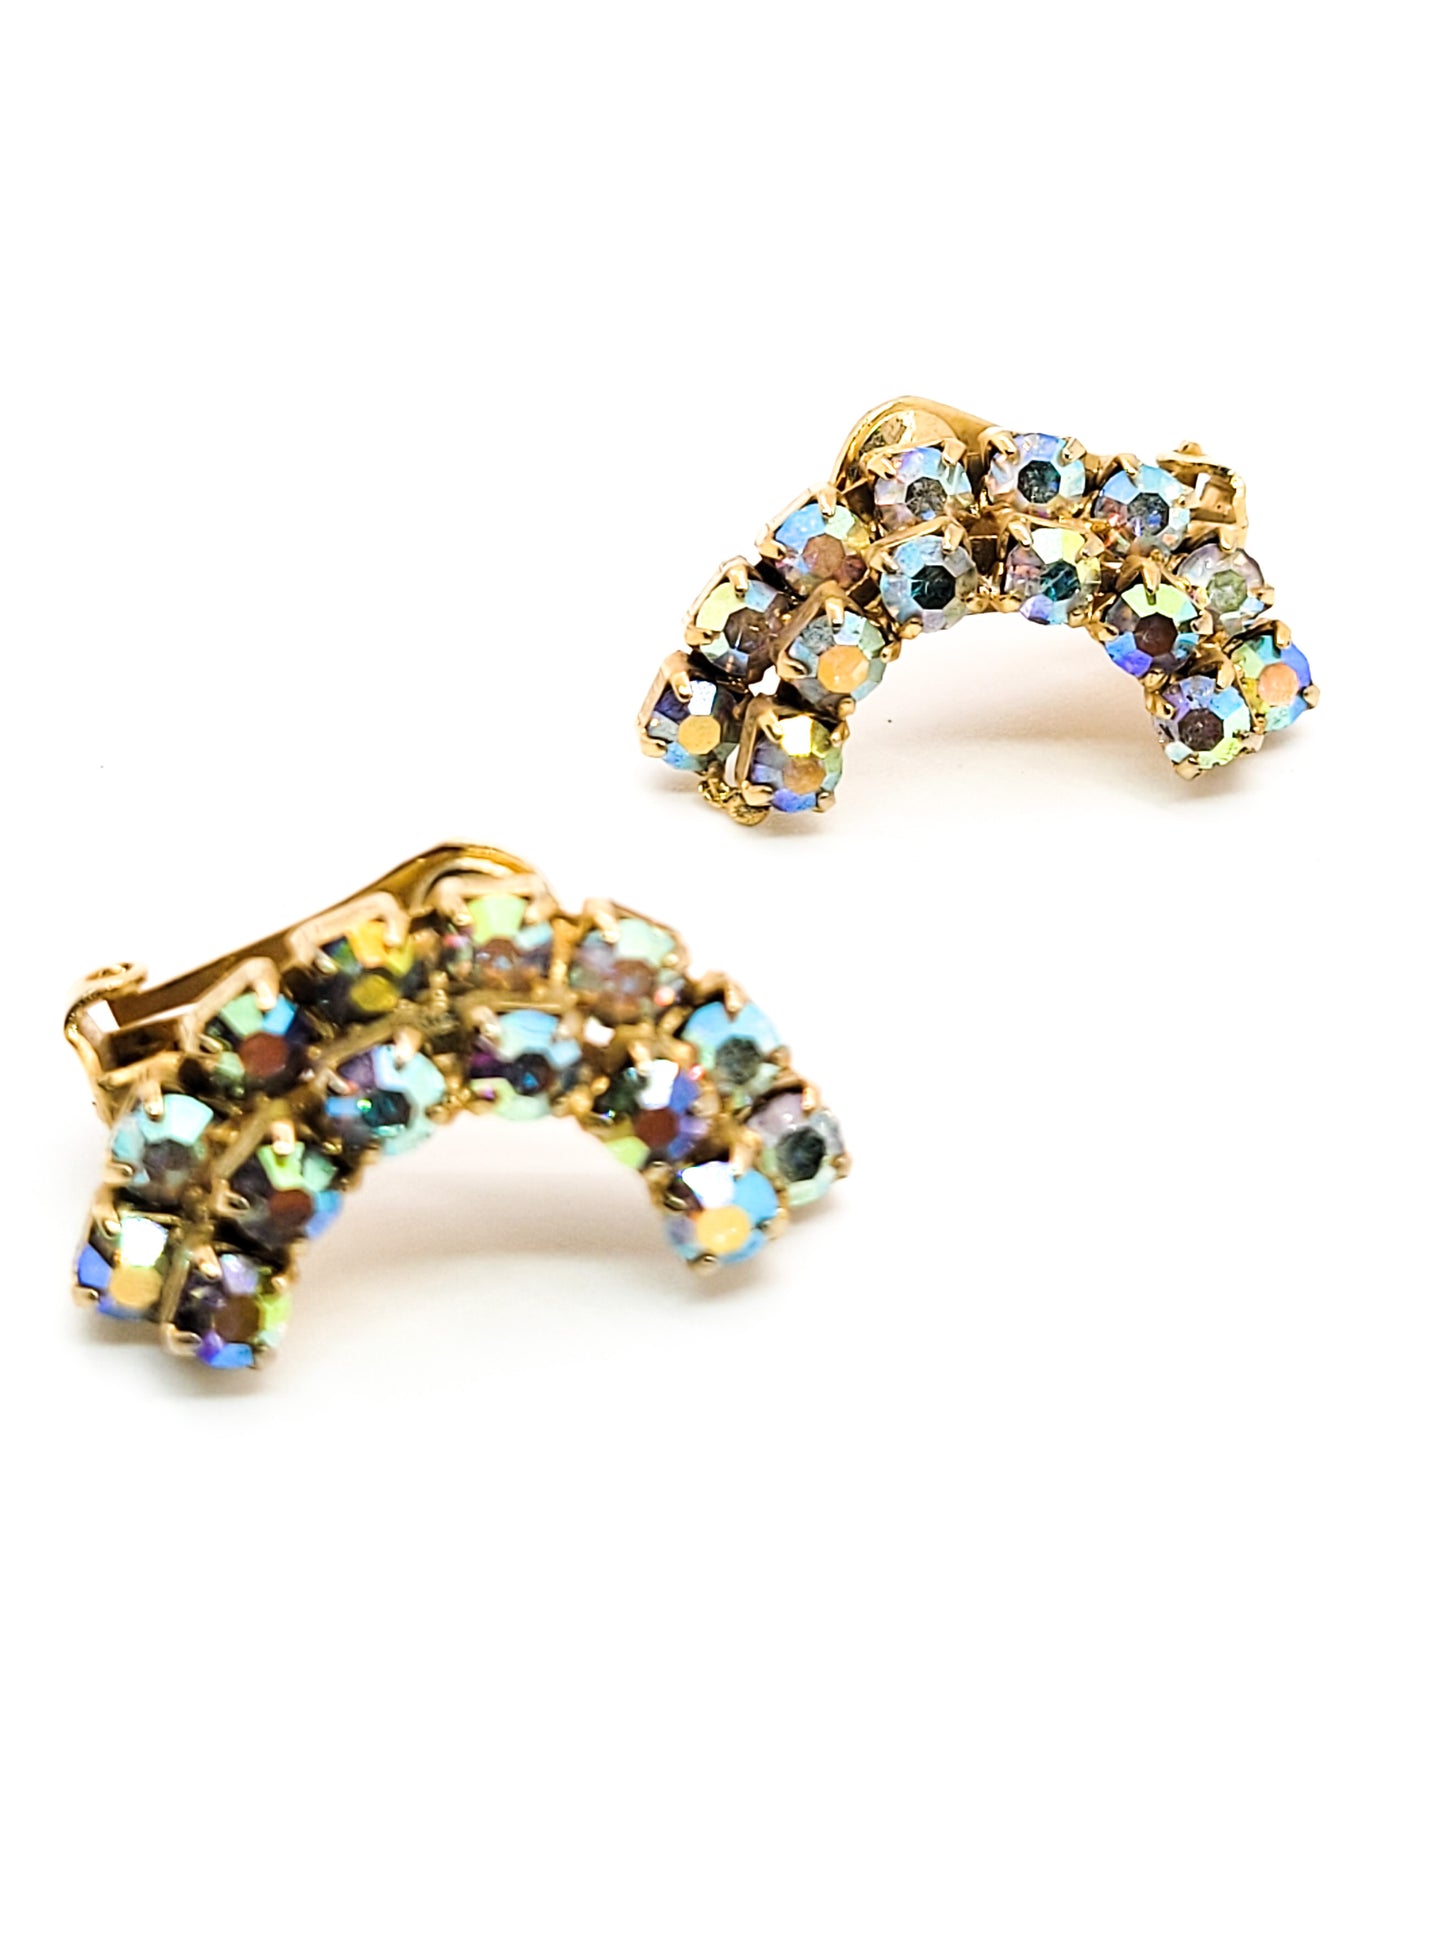 Rainbow Crescent Aurora Borealis AB gold toned prong set vintage rhinestone earrings